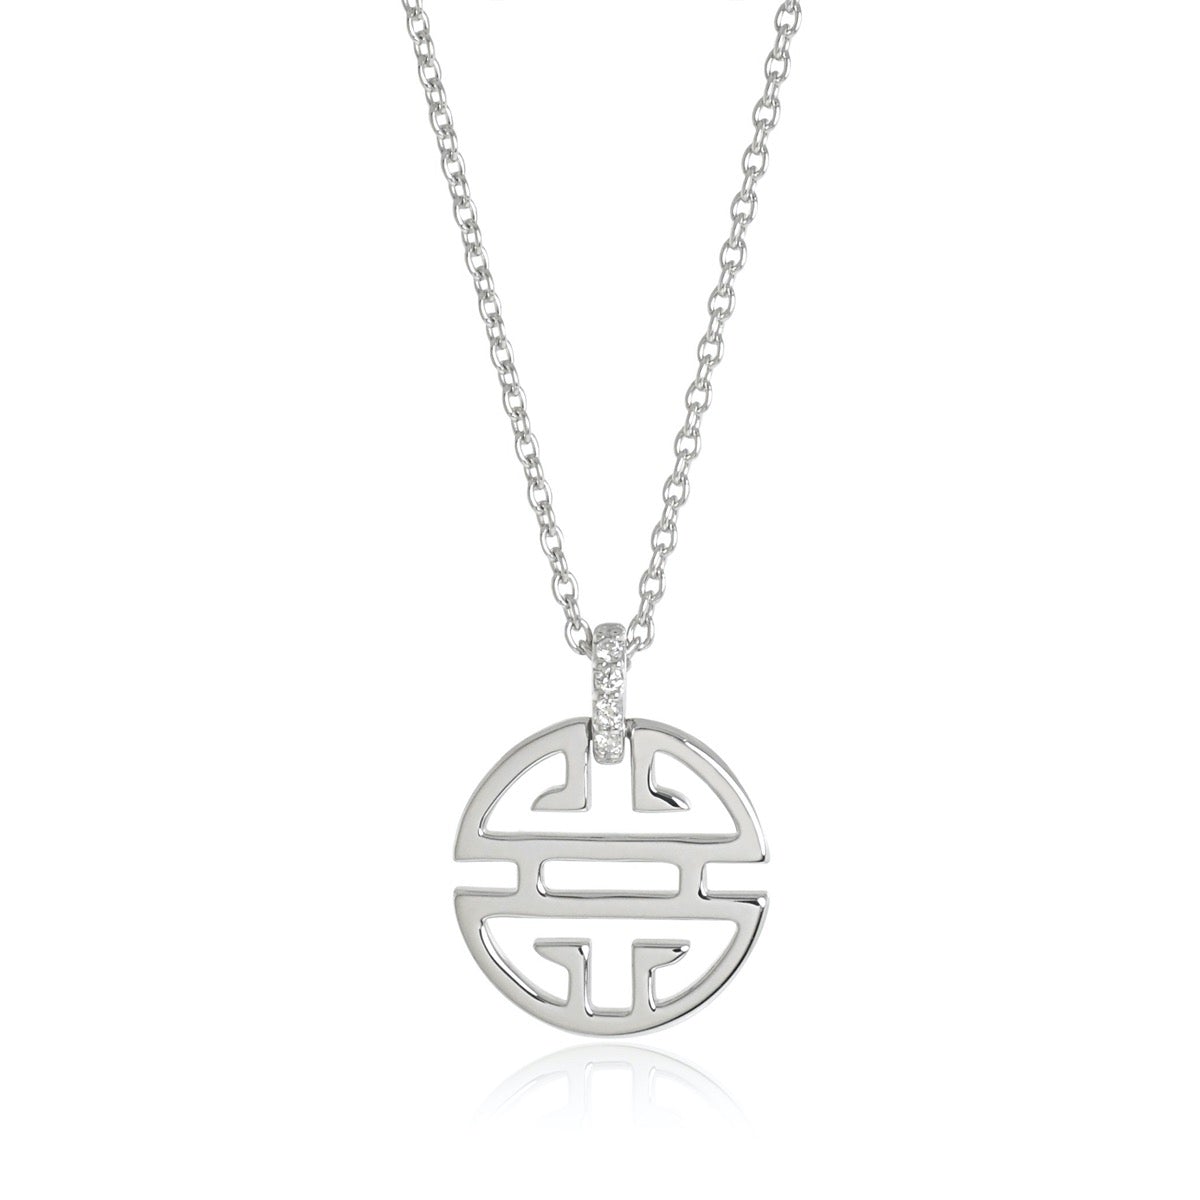 Gump's Signature Silver Shou Pendant Necklace with Diamond Bale